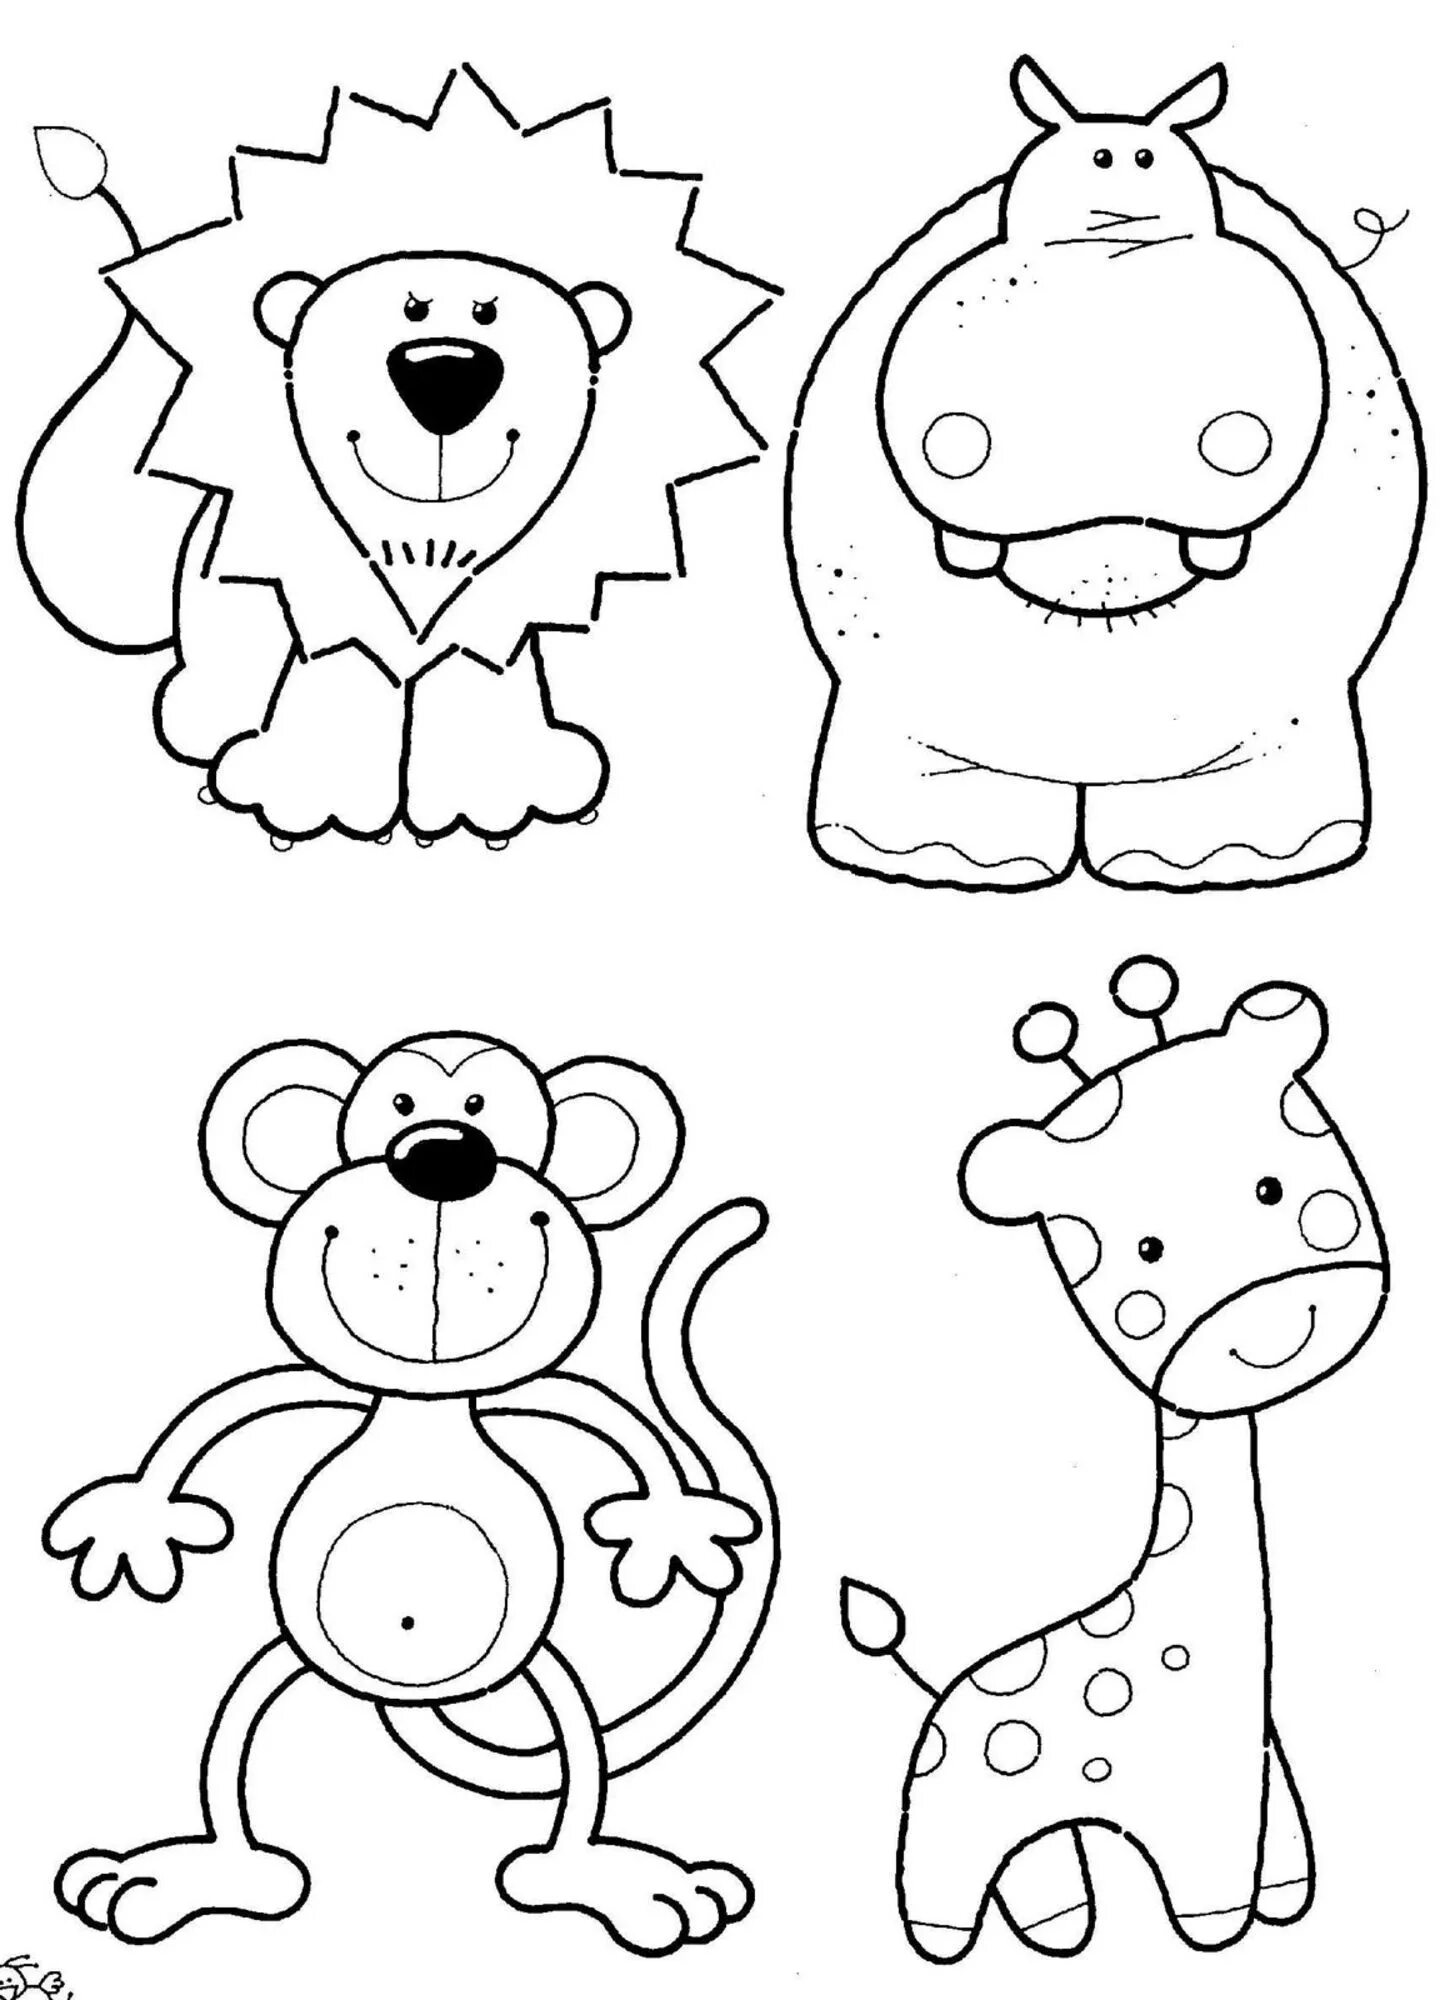 Animal drawings for kids #22